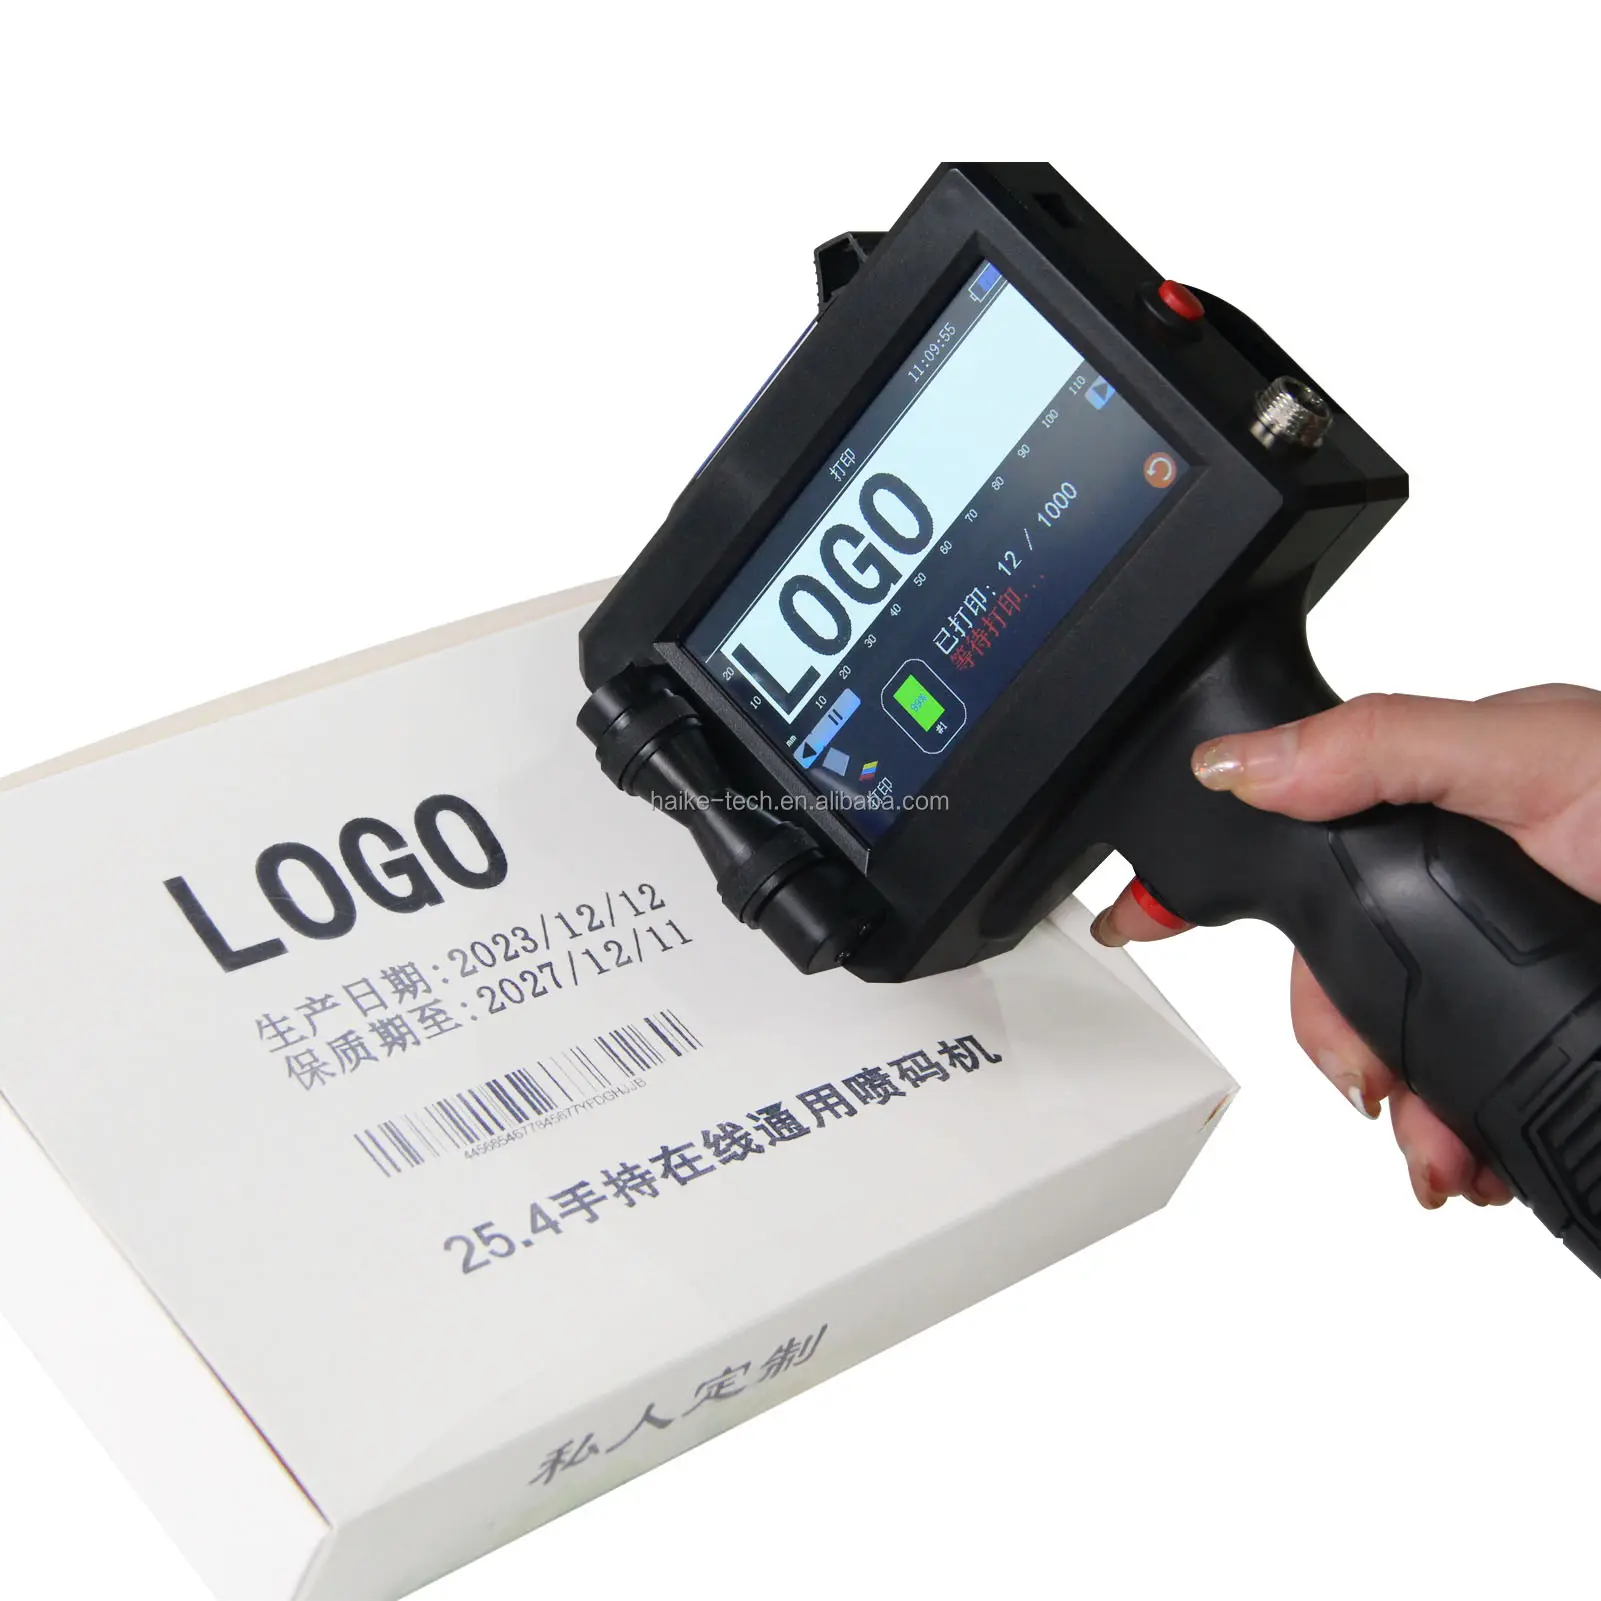 600 Dpi 12.7Mm Tij Ink Inkjet Code Machine Printer For Label Bottle Bag Expiry Date